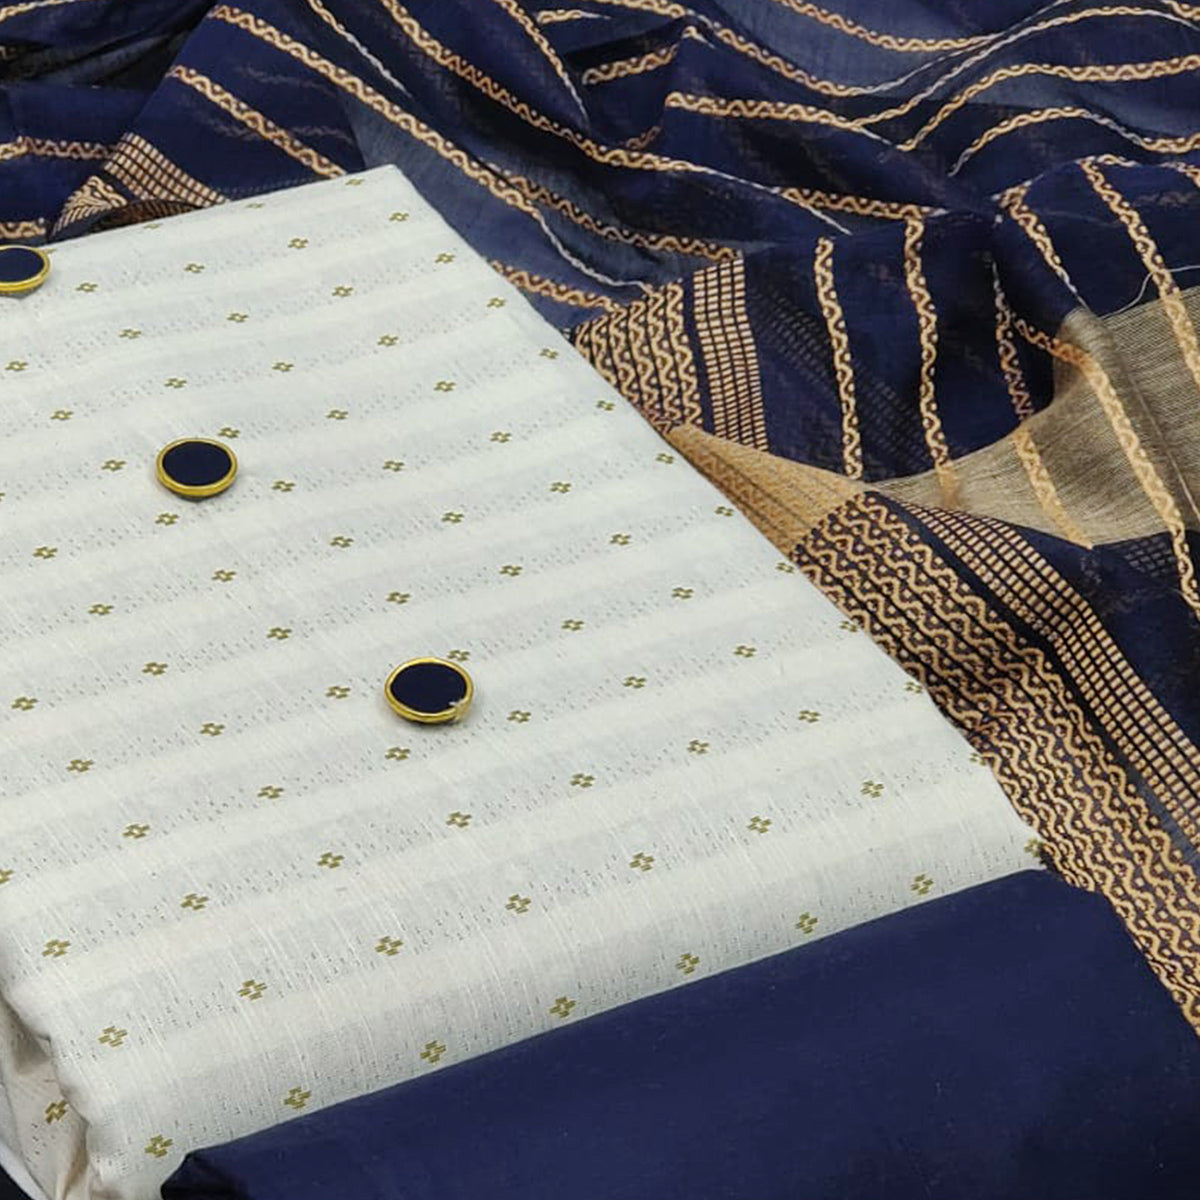 White-Navy Blue Woven Cotton Blend Dress Material